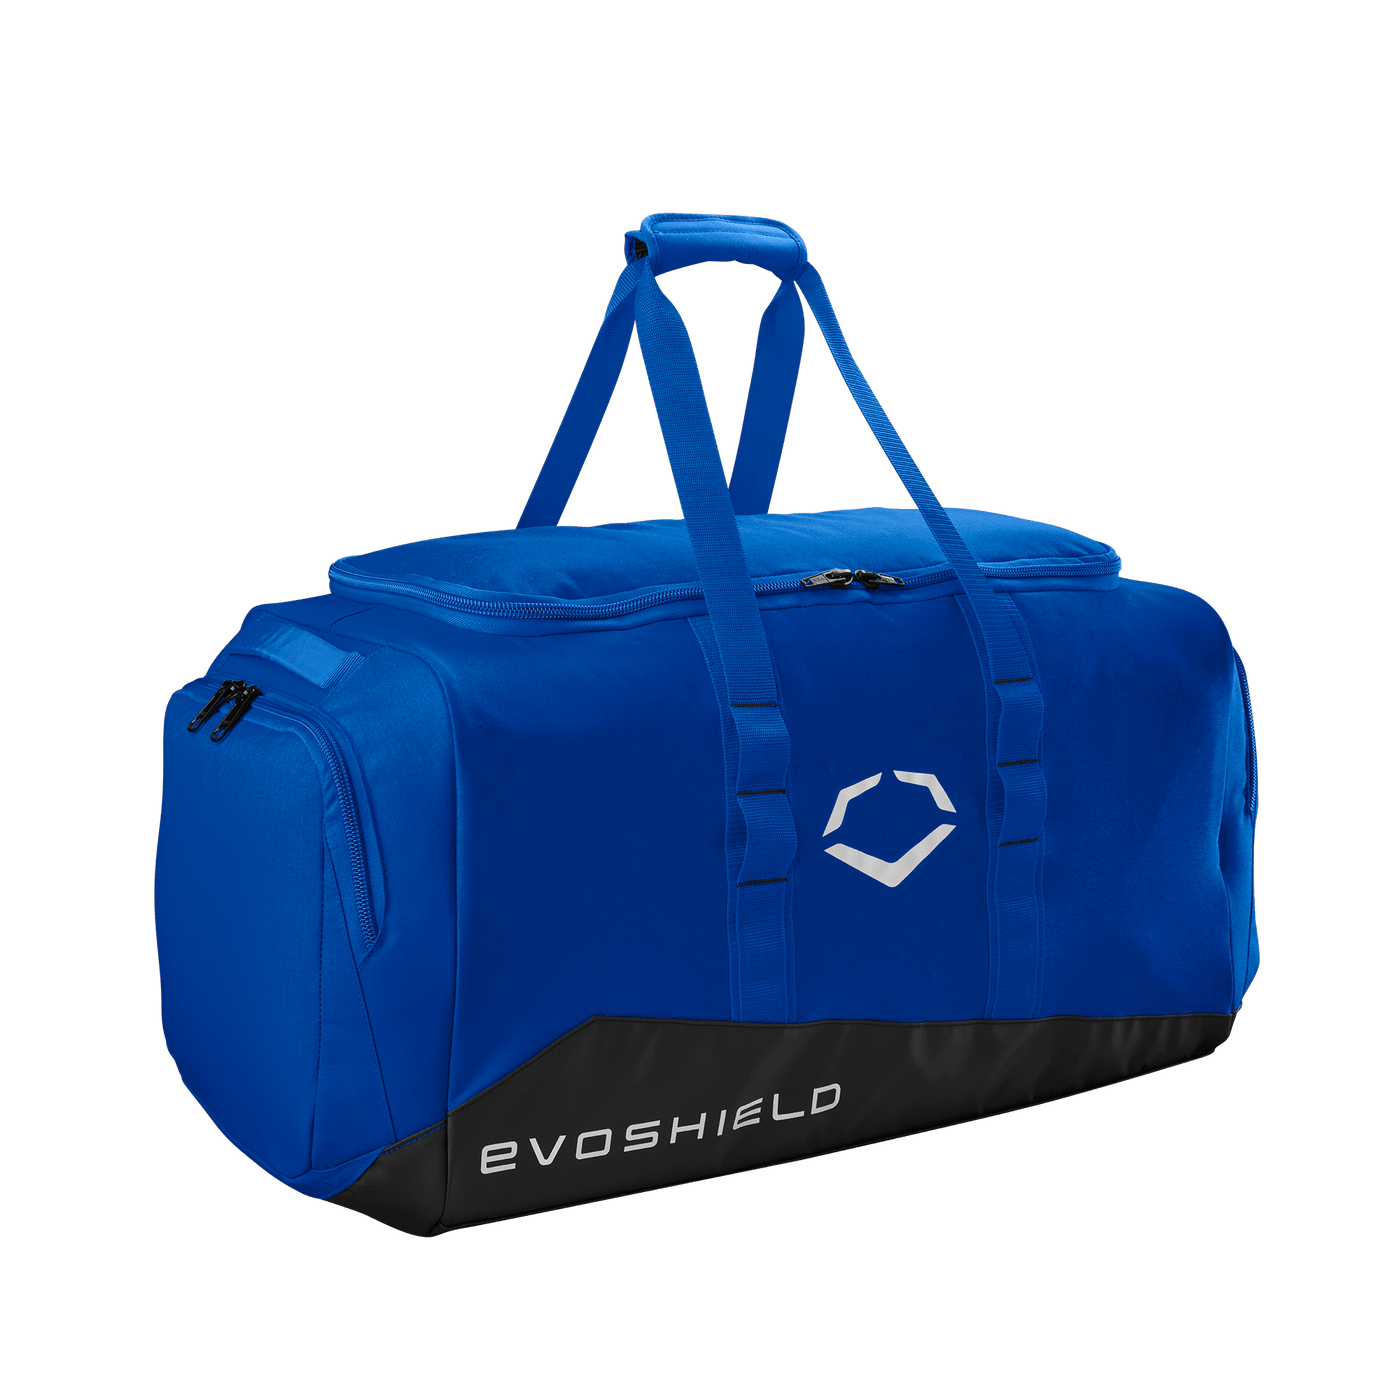 Standout Backpack | EvoShield